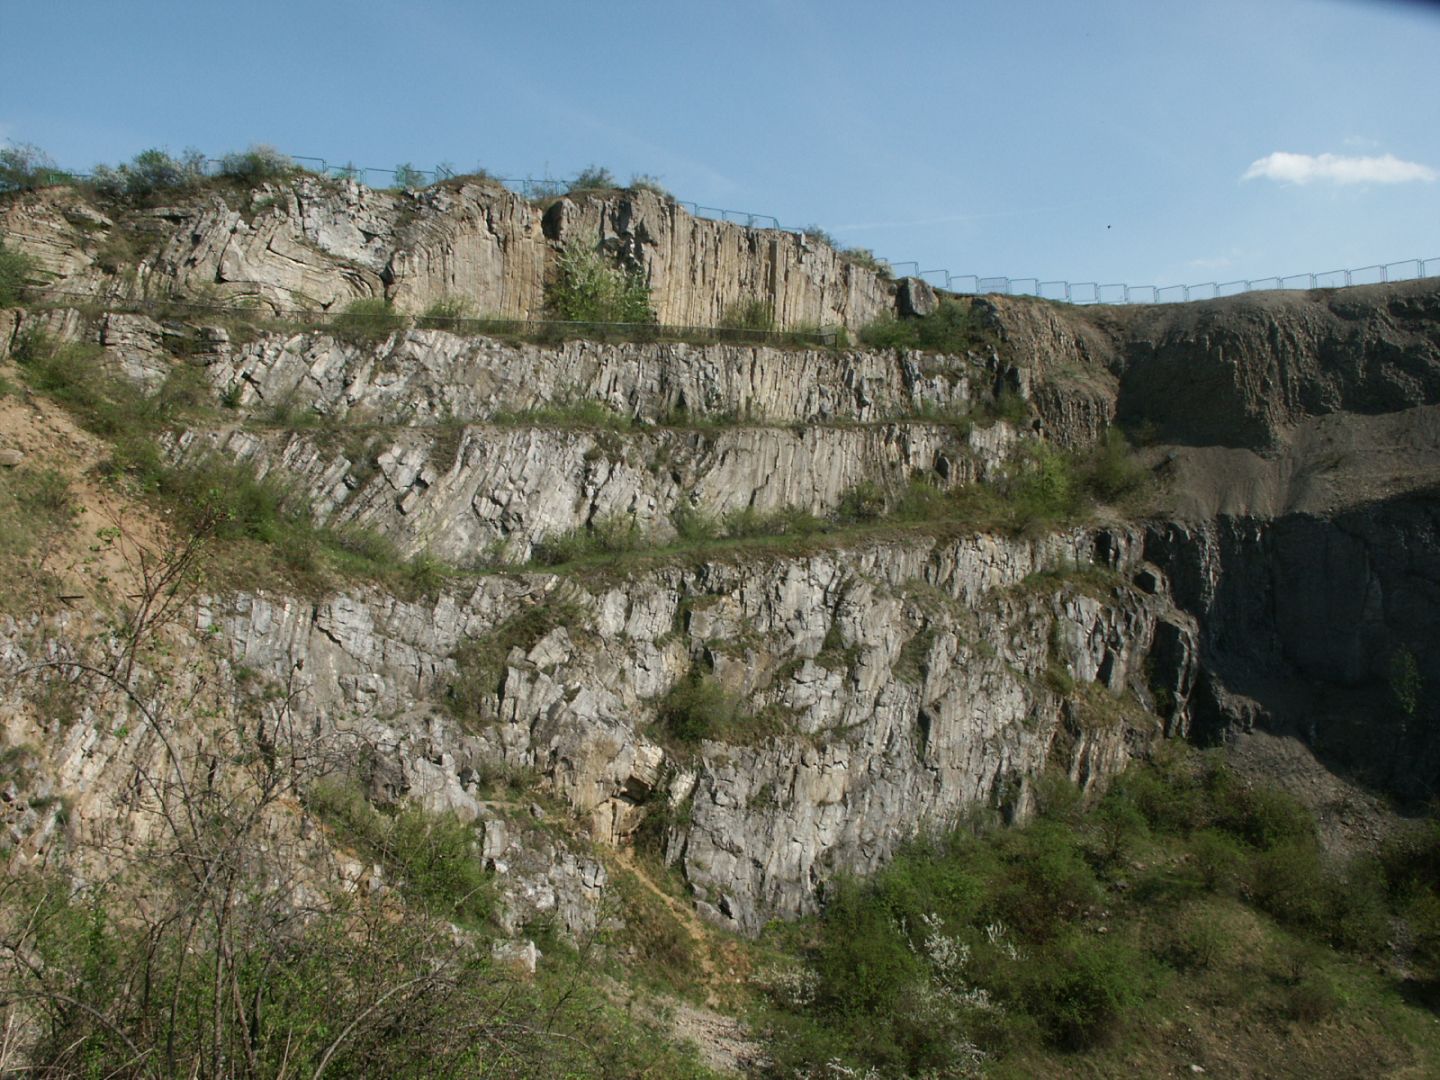 Eastern wall of the rock pillar